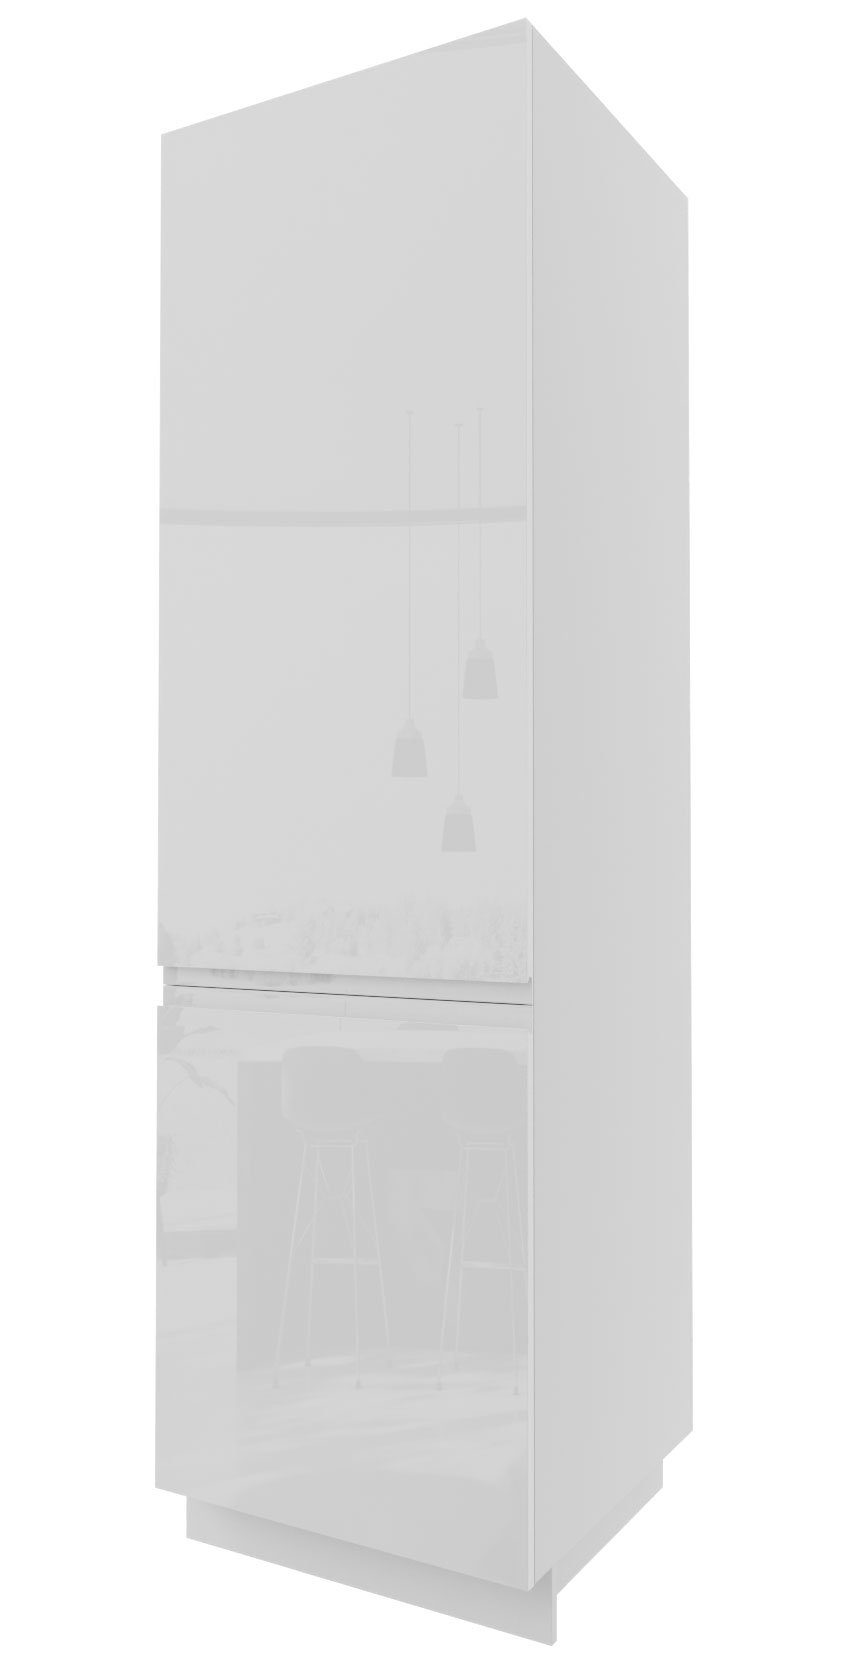 Feldmann-Wohnen Kühlumbauschrank Florence (Florence) 60cm Front-, Korpusfarbe und Ausführung wählbar grifflos 2-türig RAL 9001 cremeweiß Hochglanz